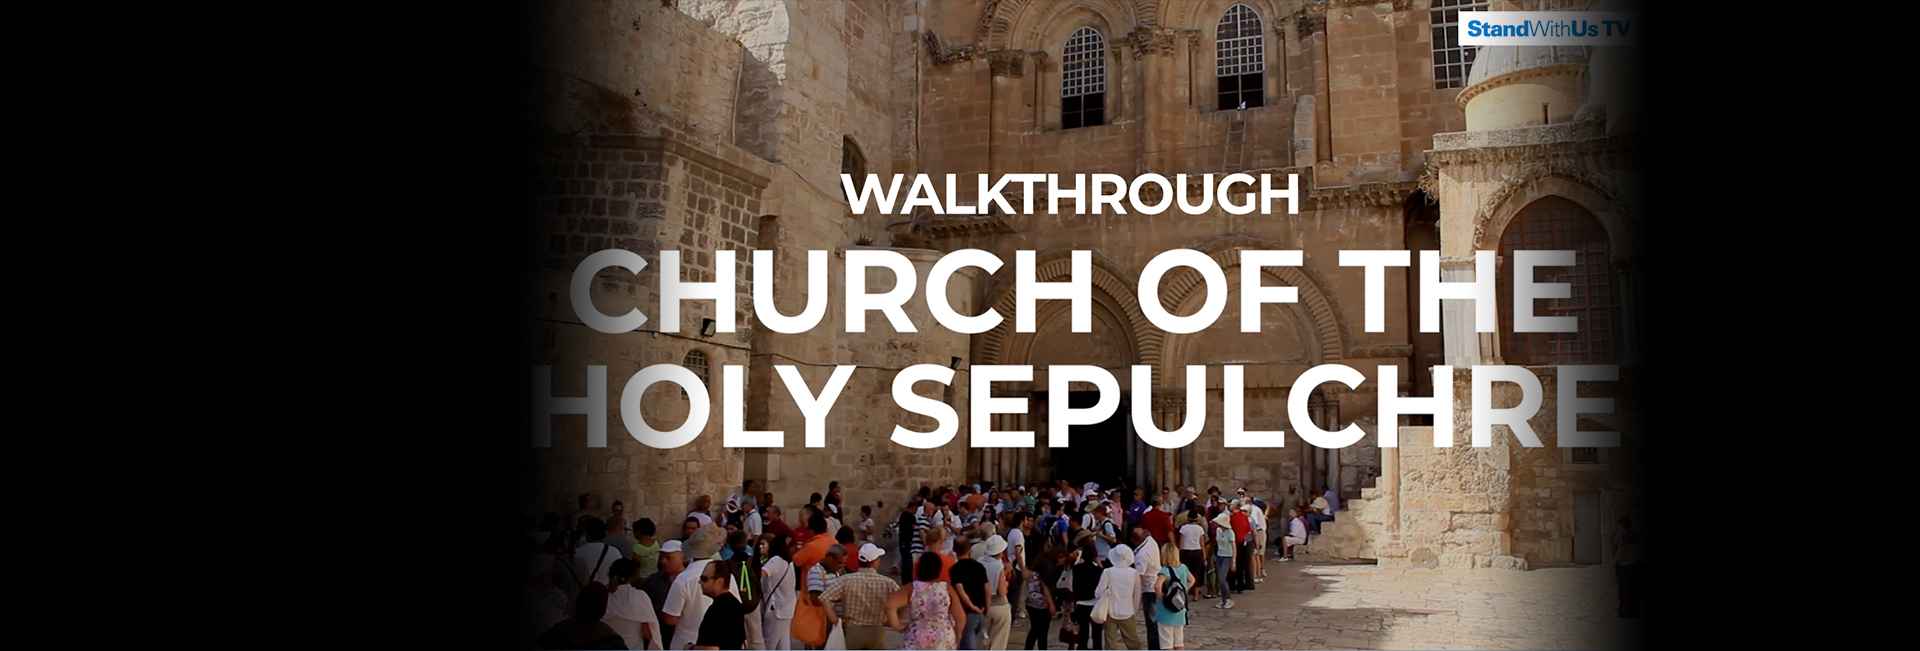 Church of the Holy Sepulchre | WalkThrough